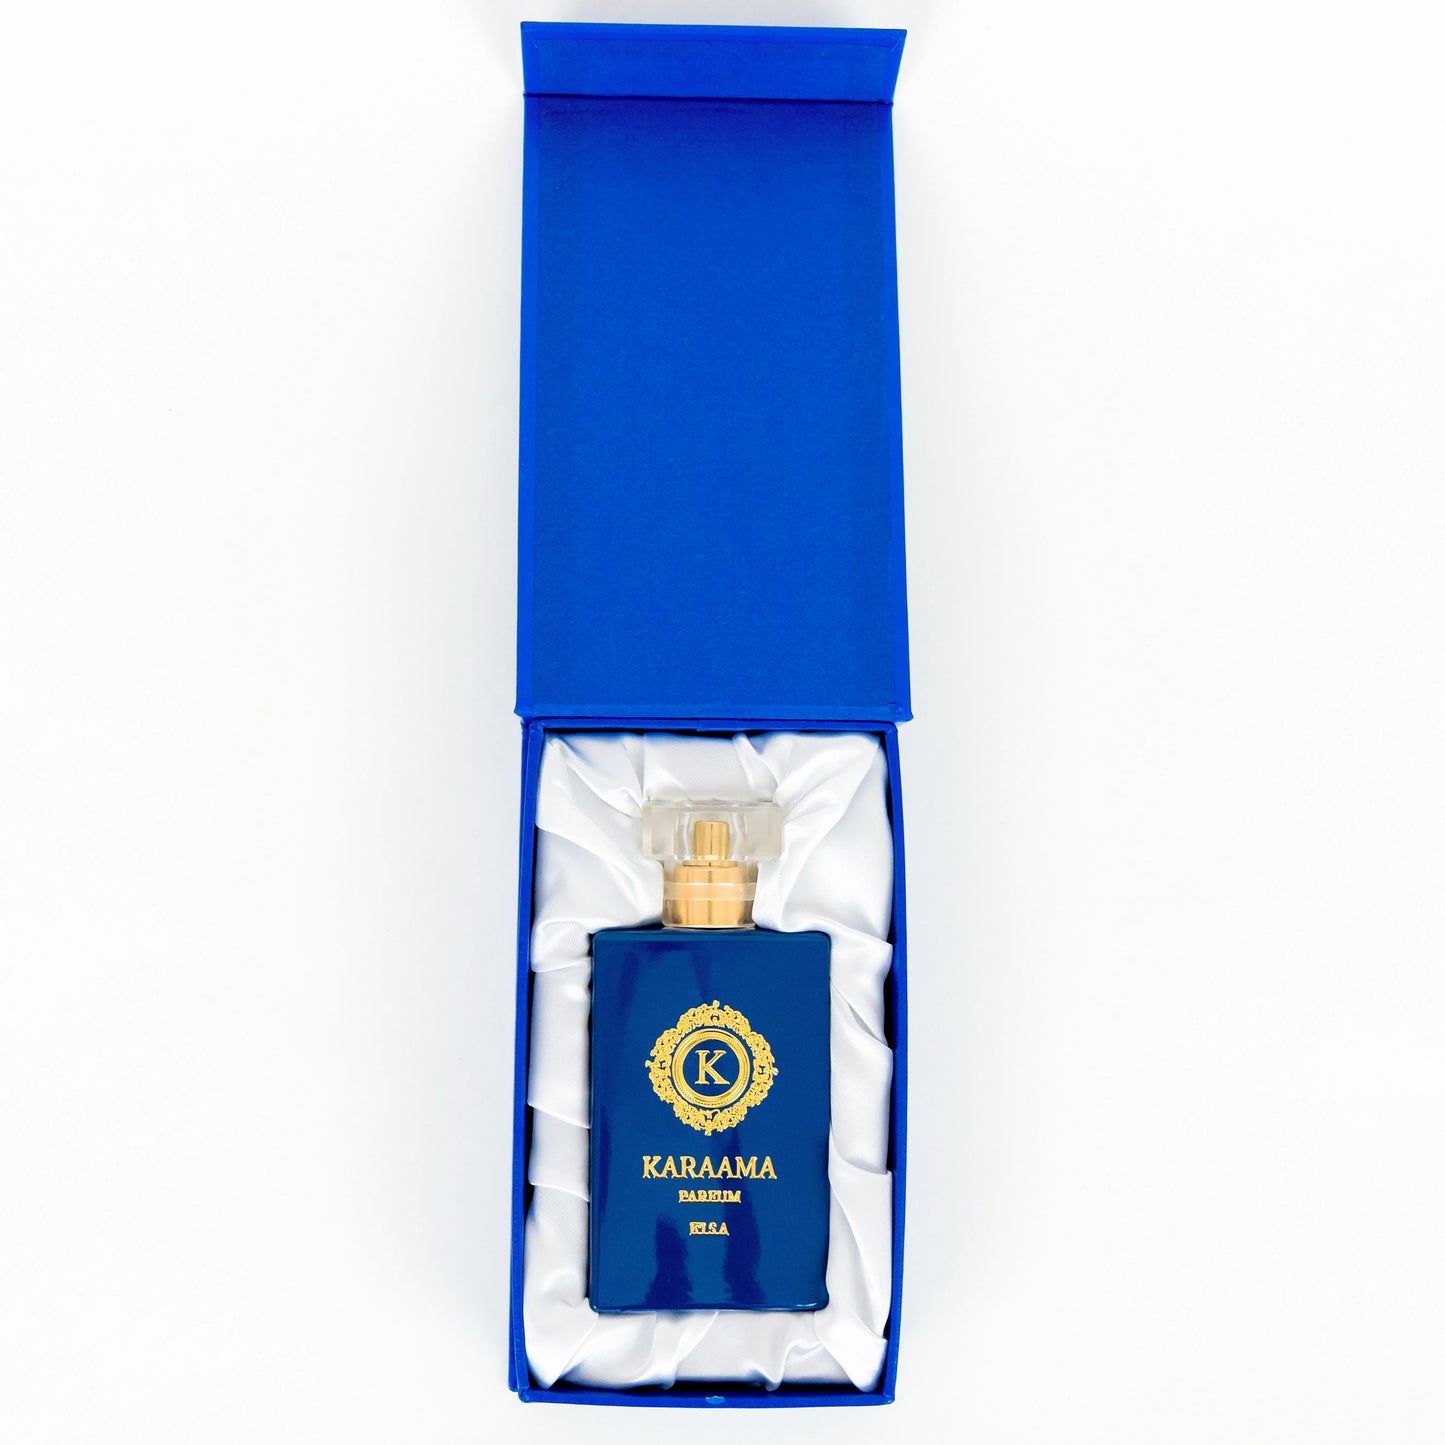 Elegant Karama perfume in a striking blue box with satin lining, showcasing luxury fragrance packaging trends, perfect for gifting. #LuxuryPerfume #GiftIdeas #ElegantPackaging